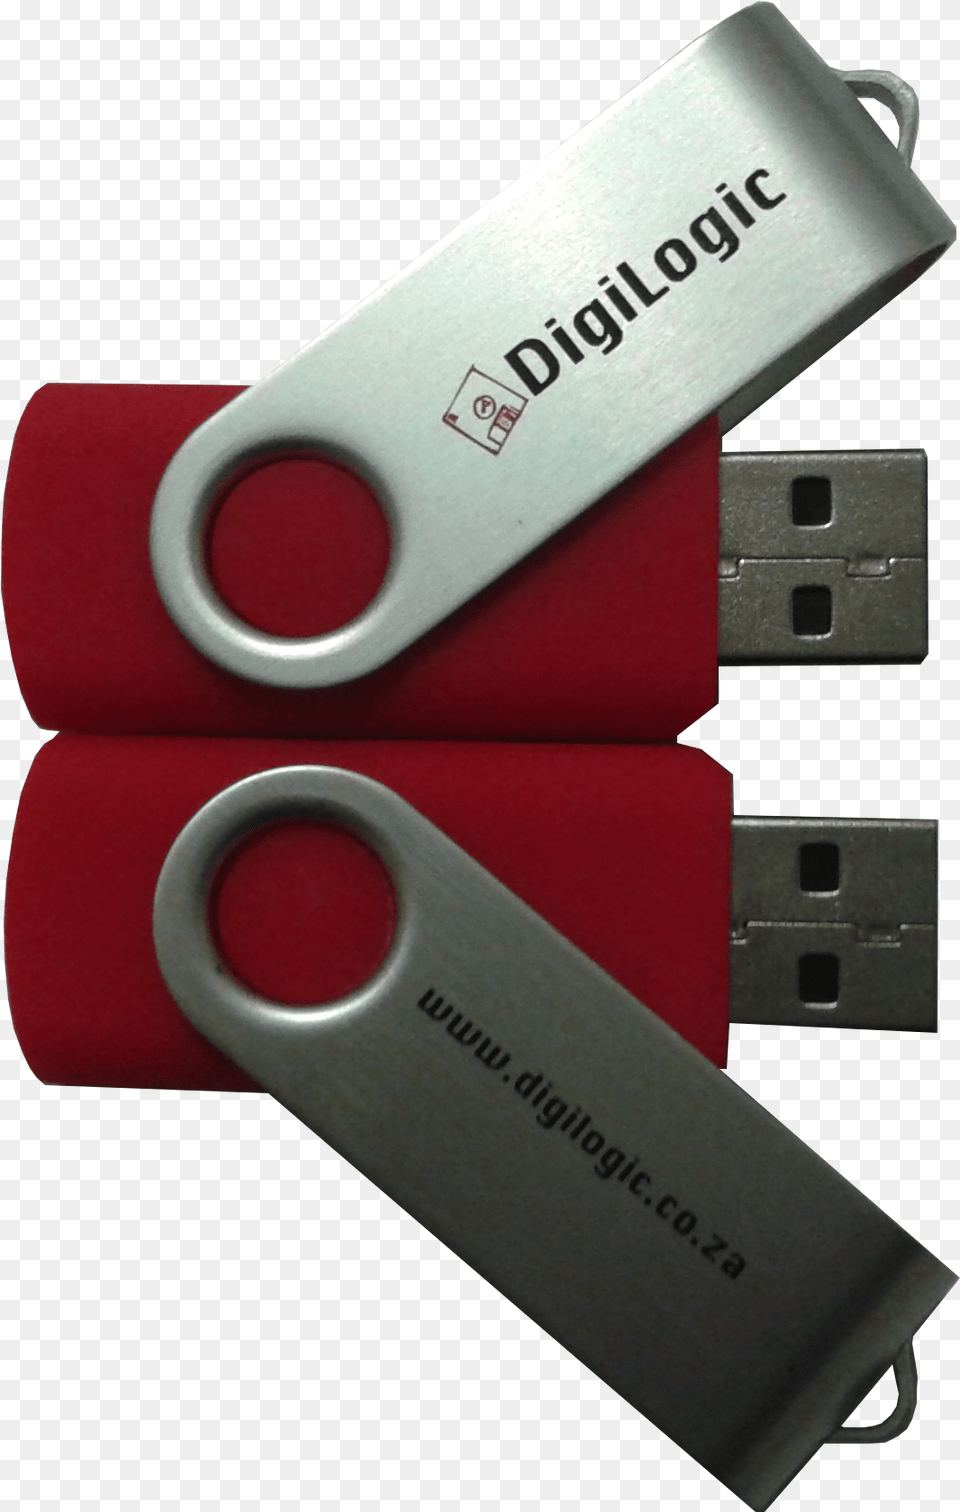 Digilogic Flash Drives Usb Flash Drive, Electronics, Hardware, Computer Hardware Free Transparent Png